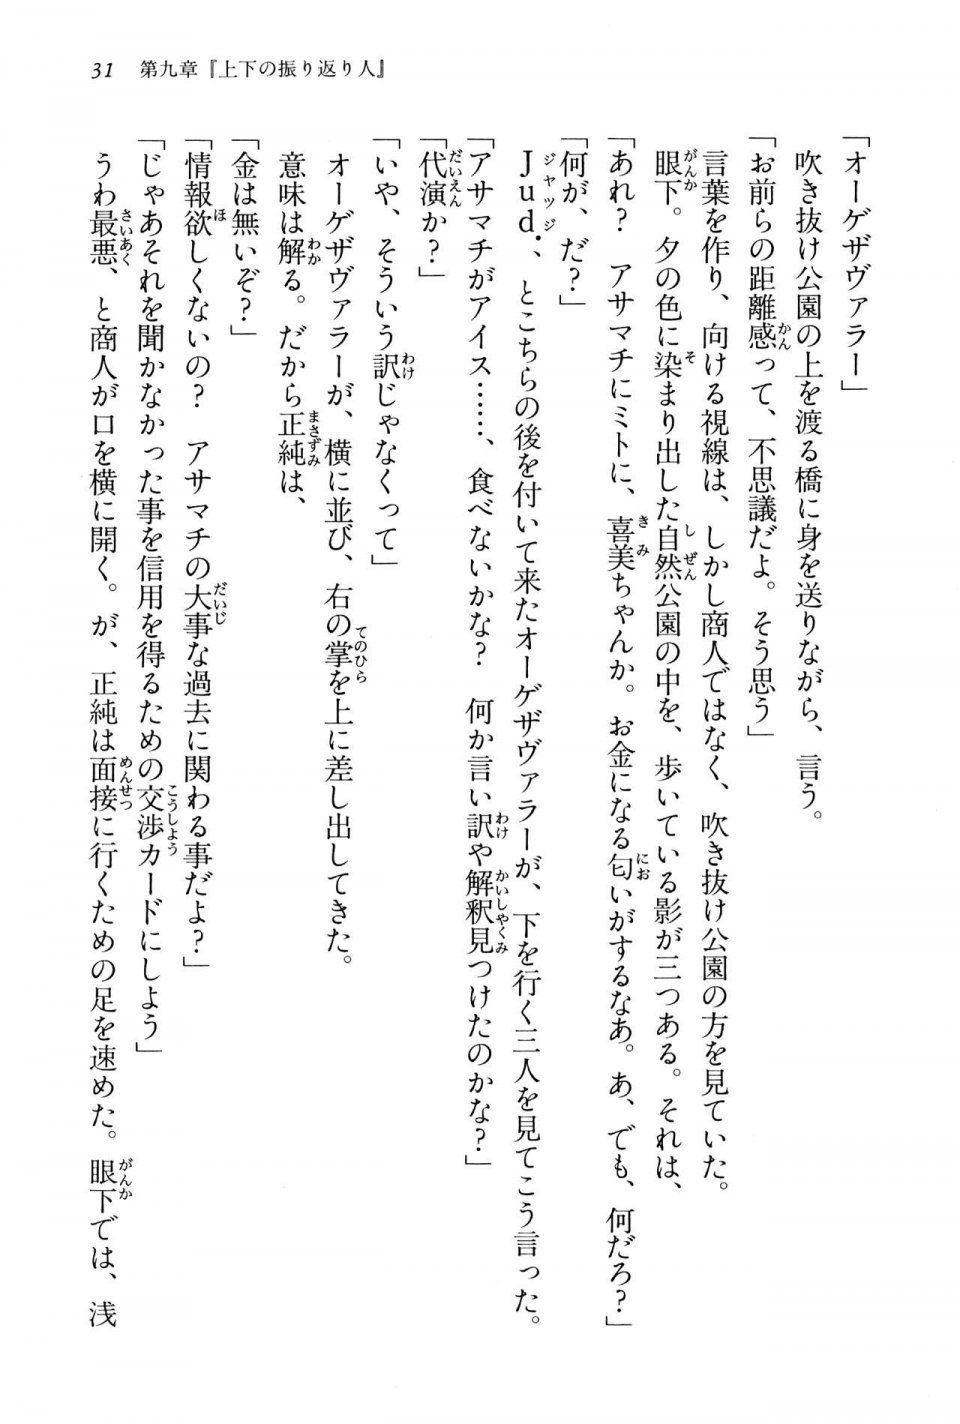 Kyoukai Senjou no Horizon BD Special Mininovel Vol 3(2A) - Photo #35